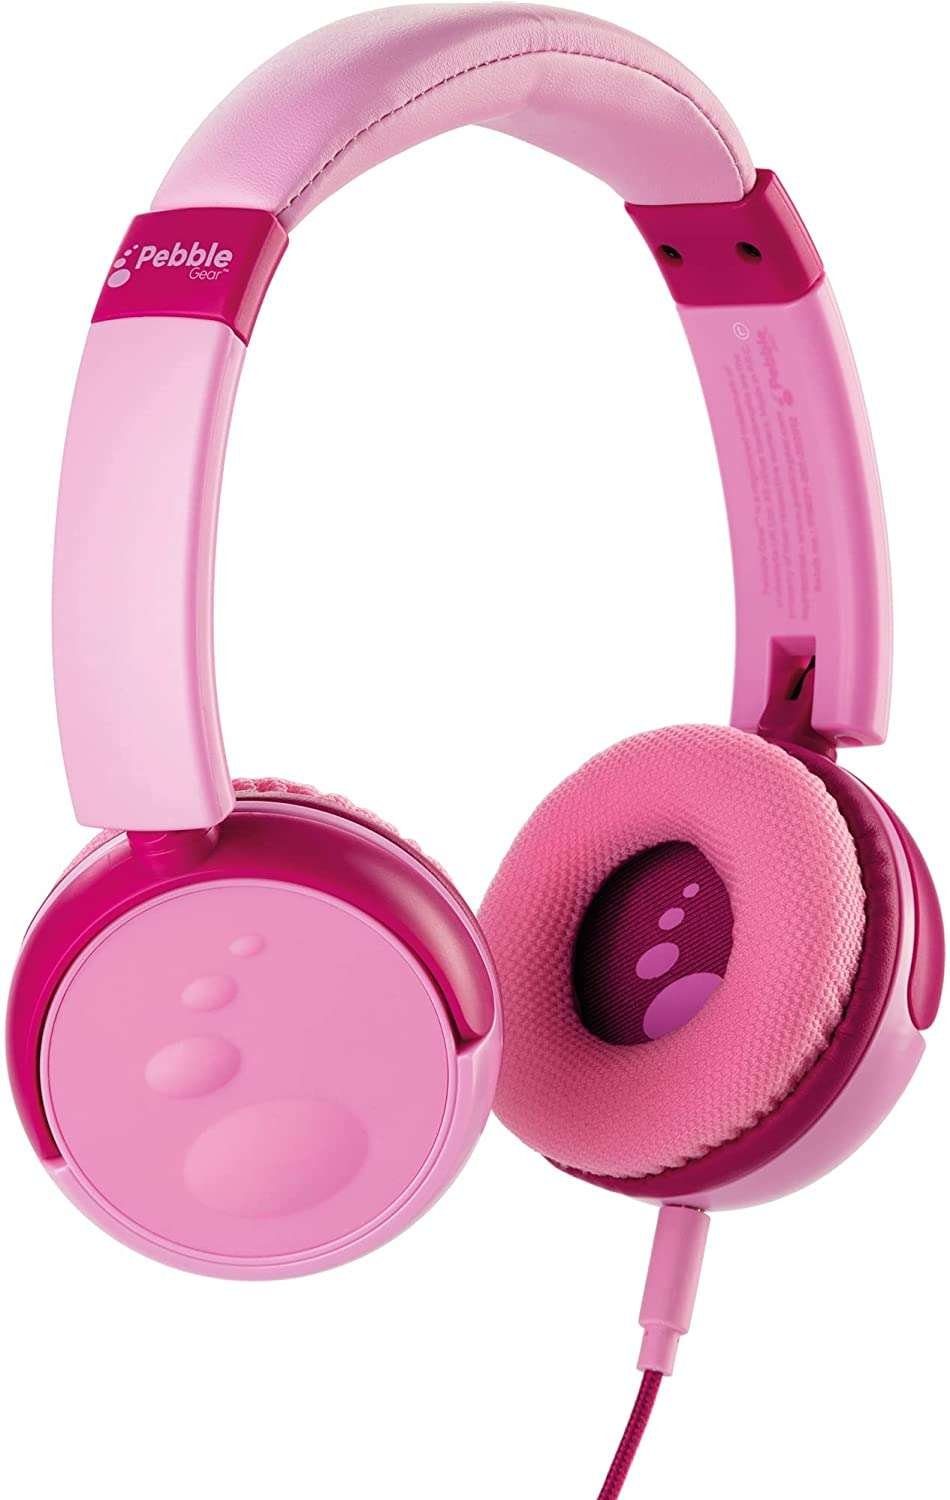 Kinderkopfhörer Klinke - Lautstärkebegrenzung dB 85 pink Kinder-Kopfhörer Kids-Design) kindersicher blau/ Gear Pebble faltbar, (3,5mm